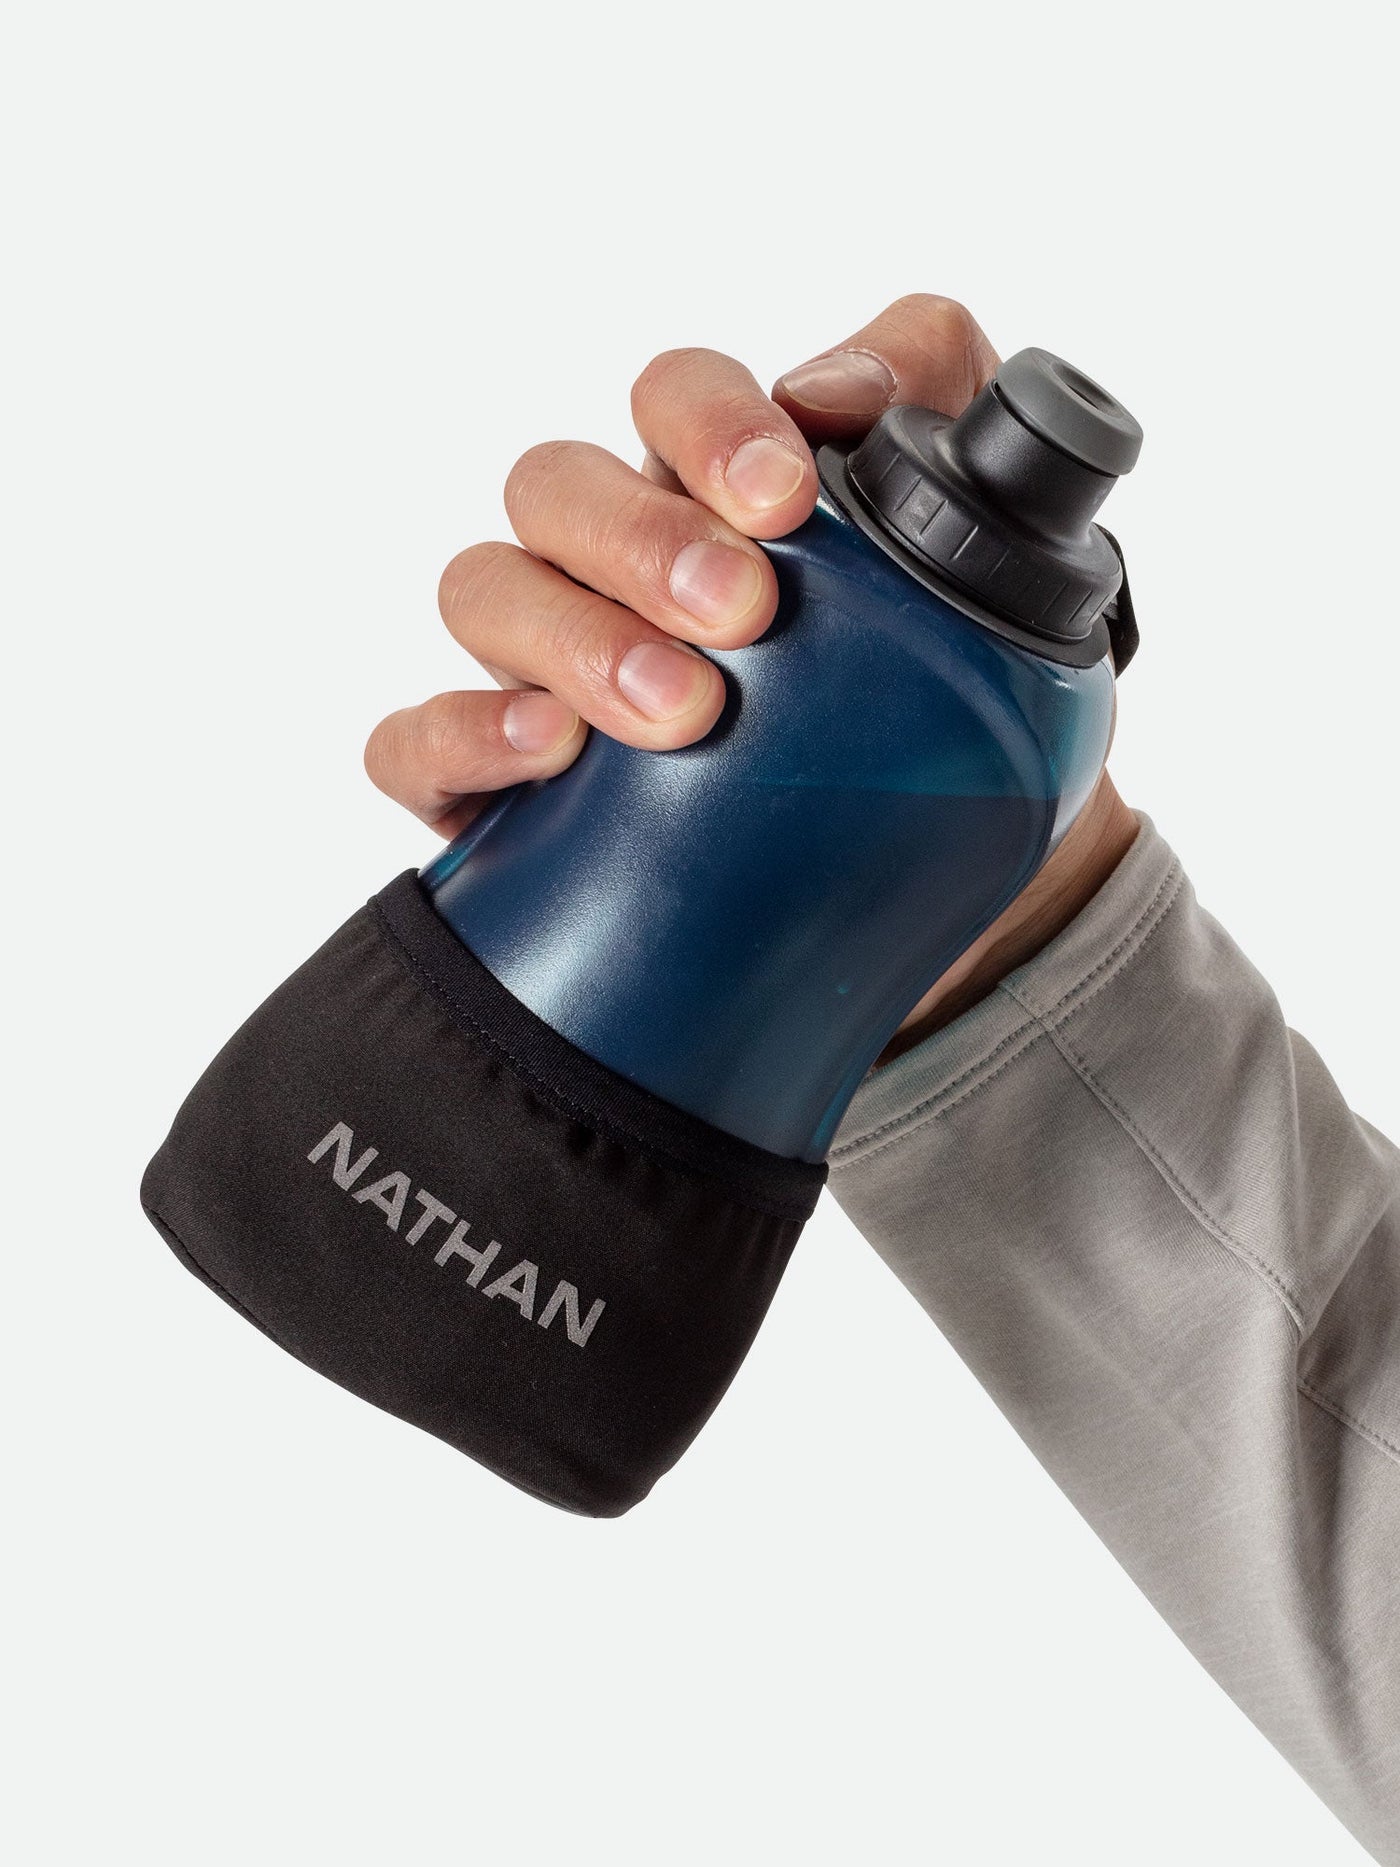 Nathan QuickSqueeze Lite 18 oz. Handheld Bottle - NS40120-00030